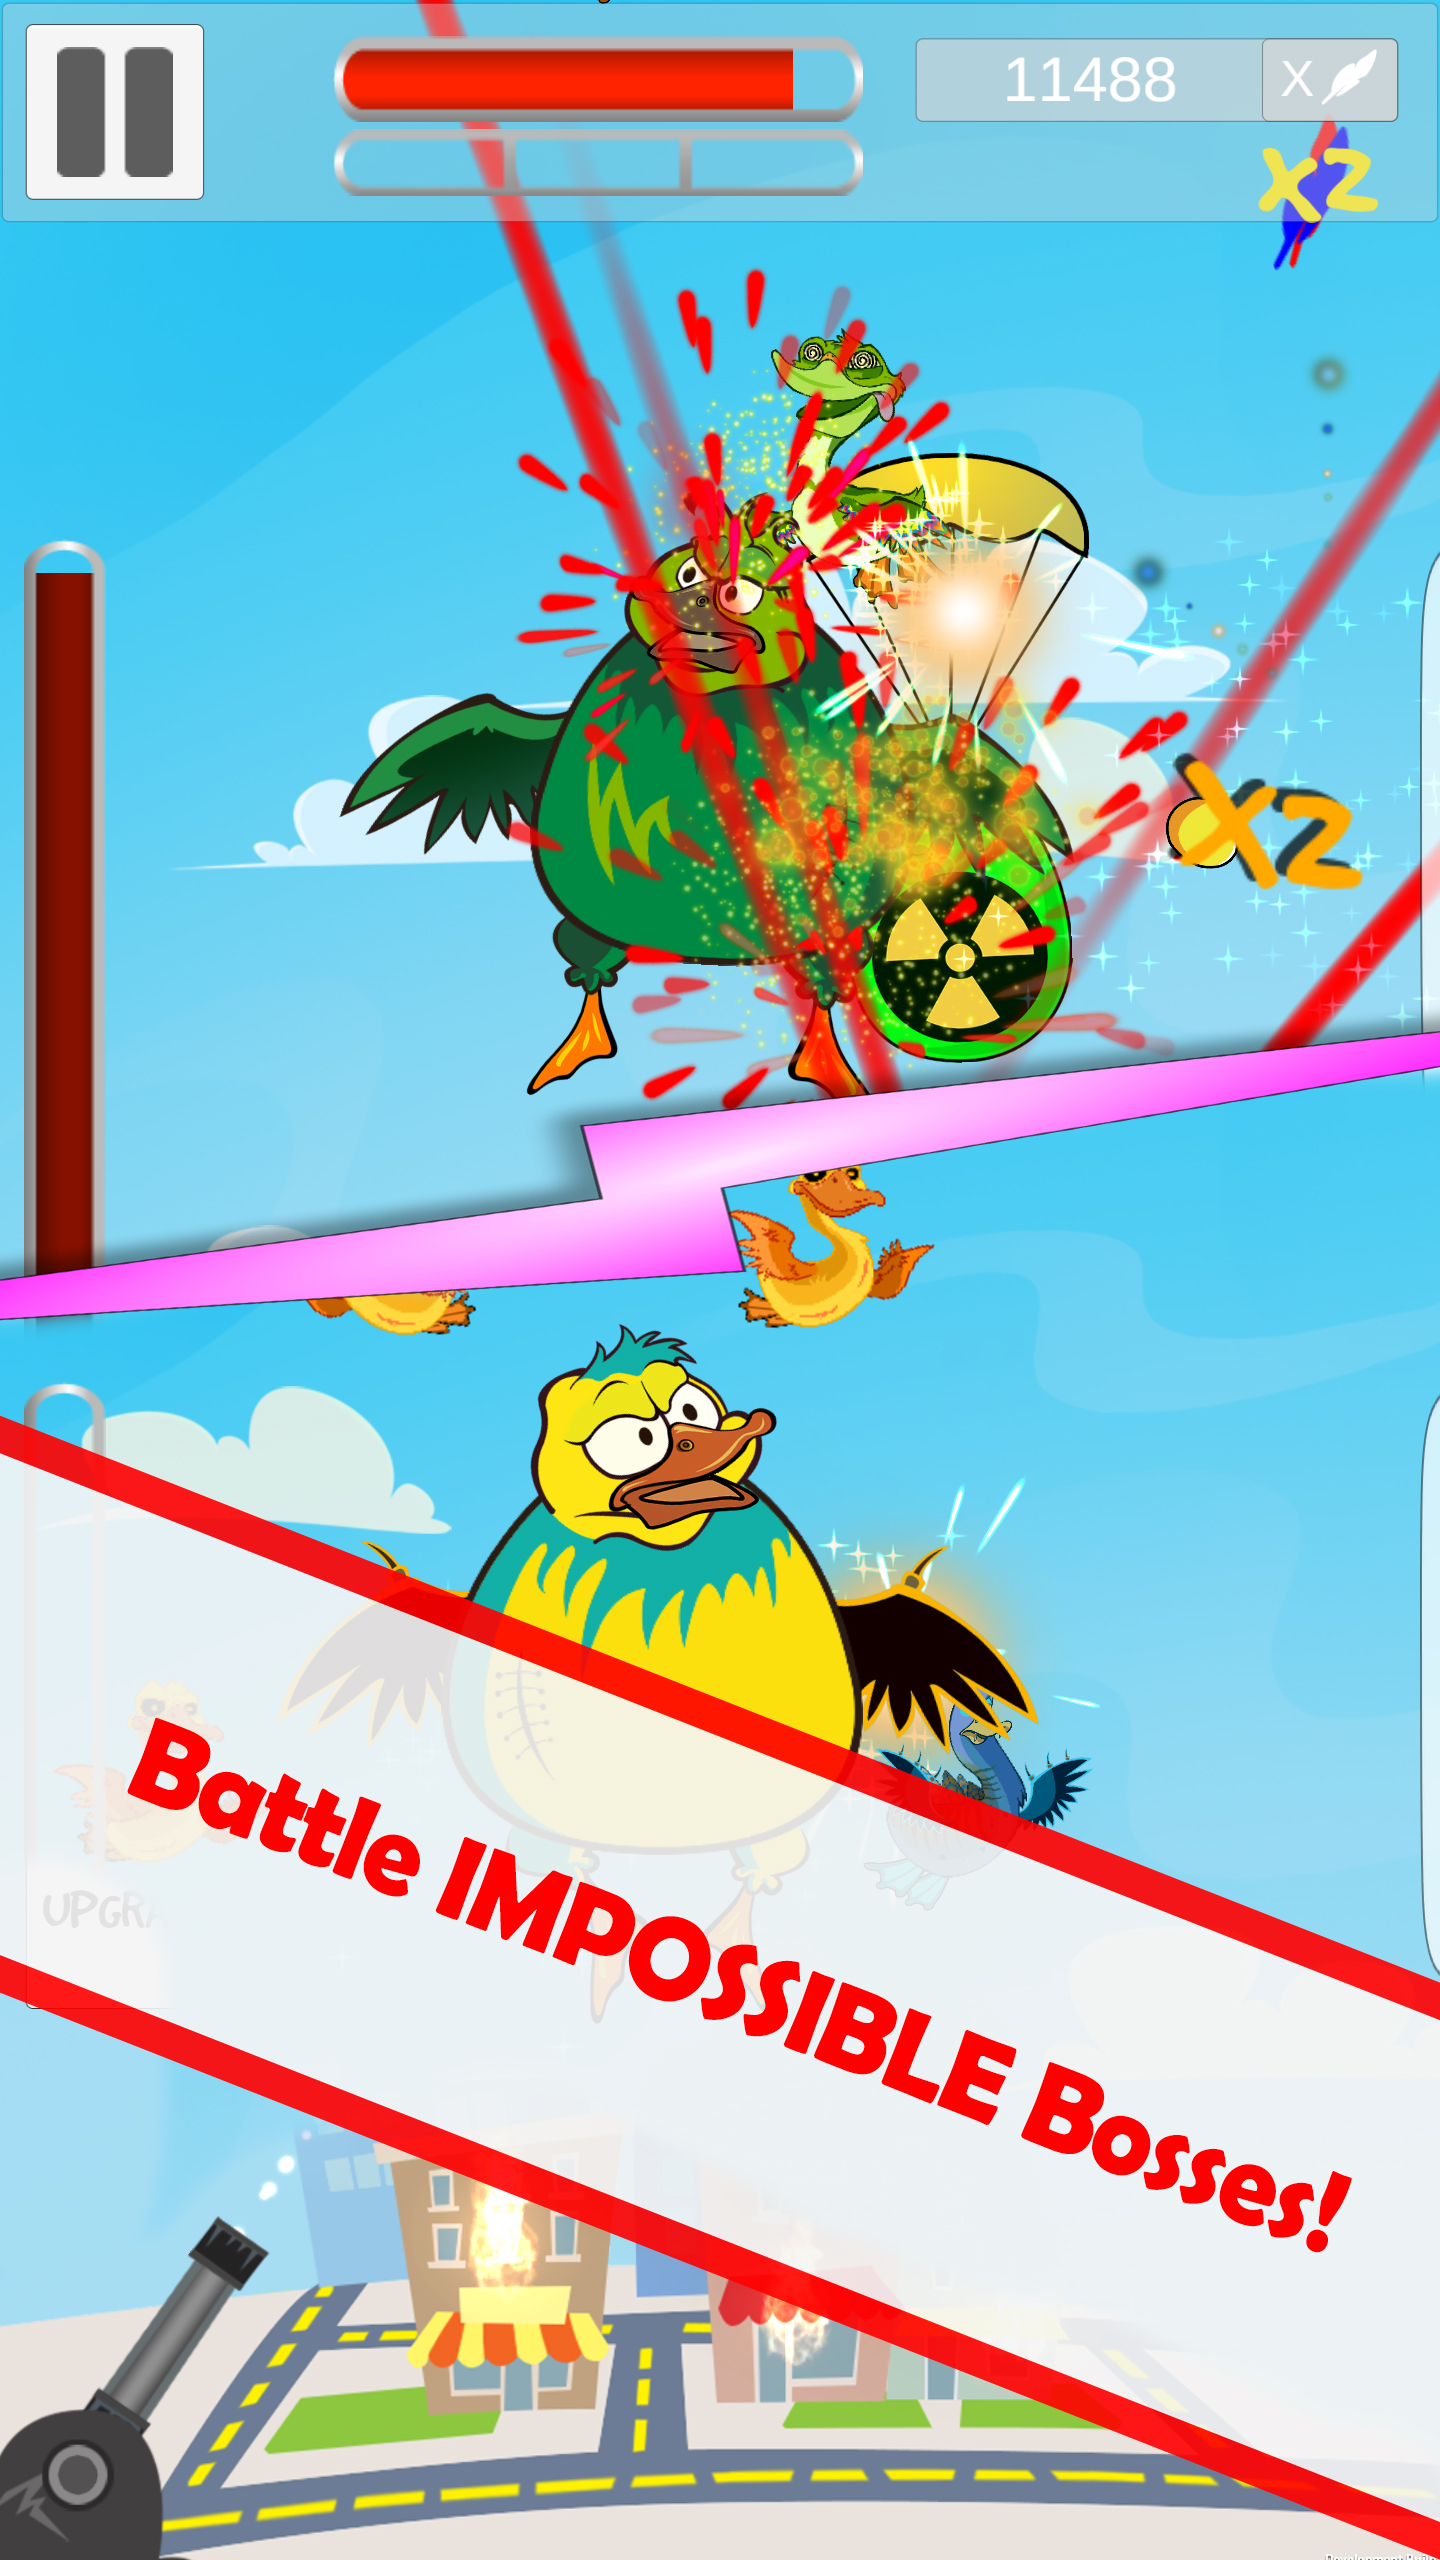 Mutant Duck Invasion Battle impossible bosses.